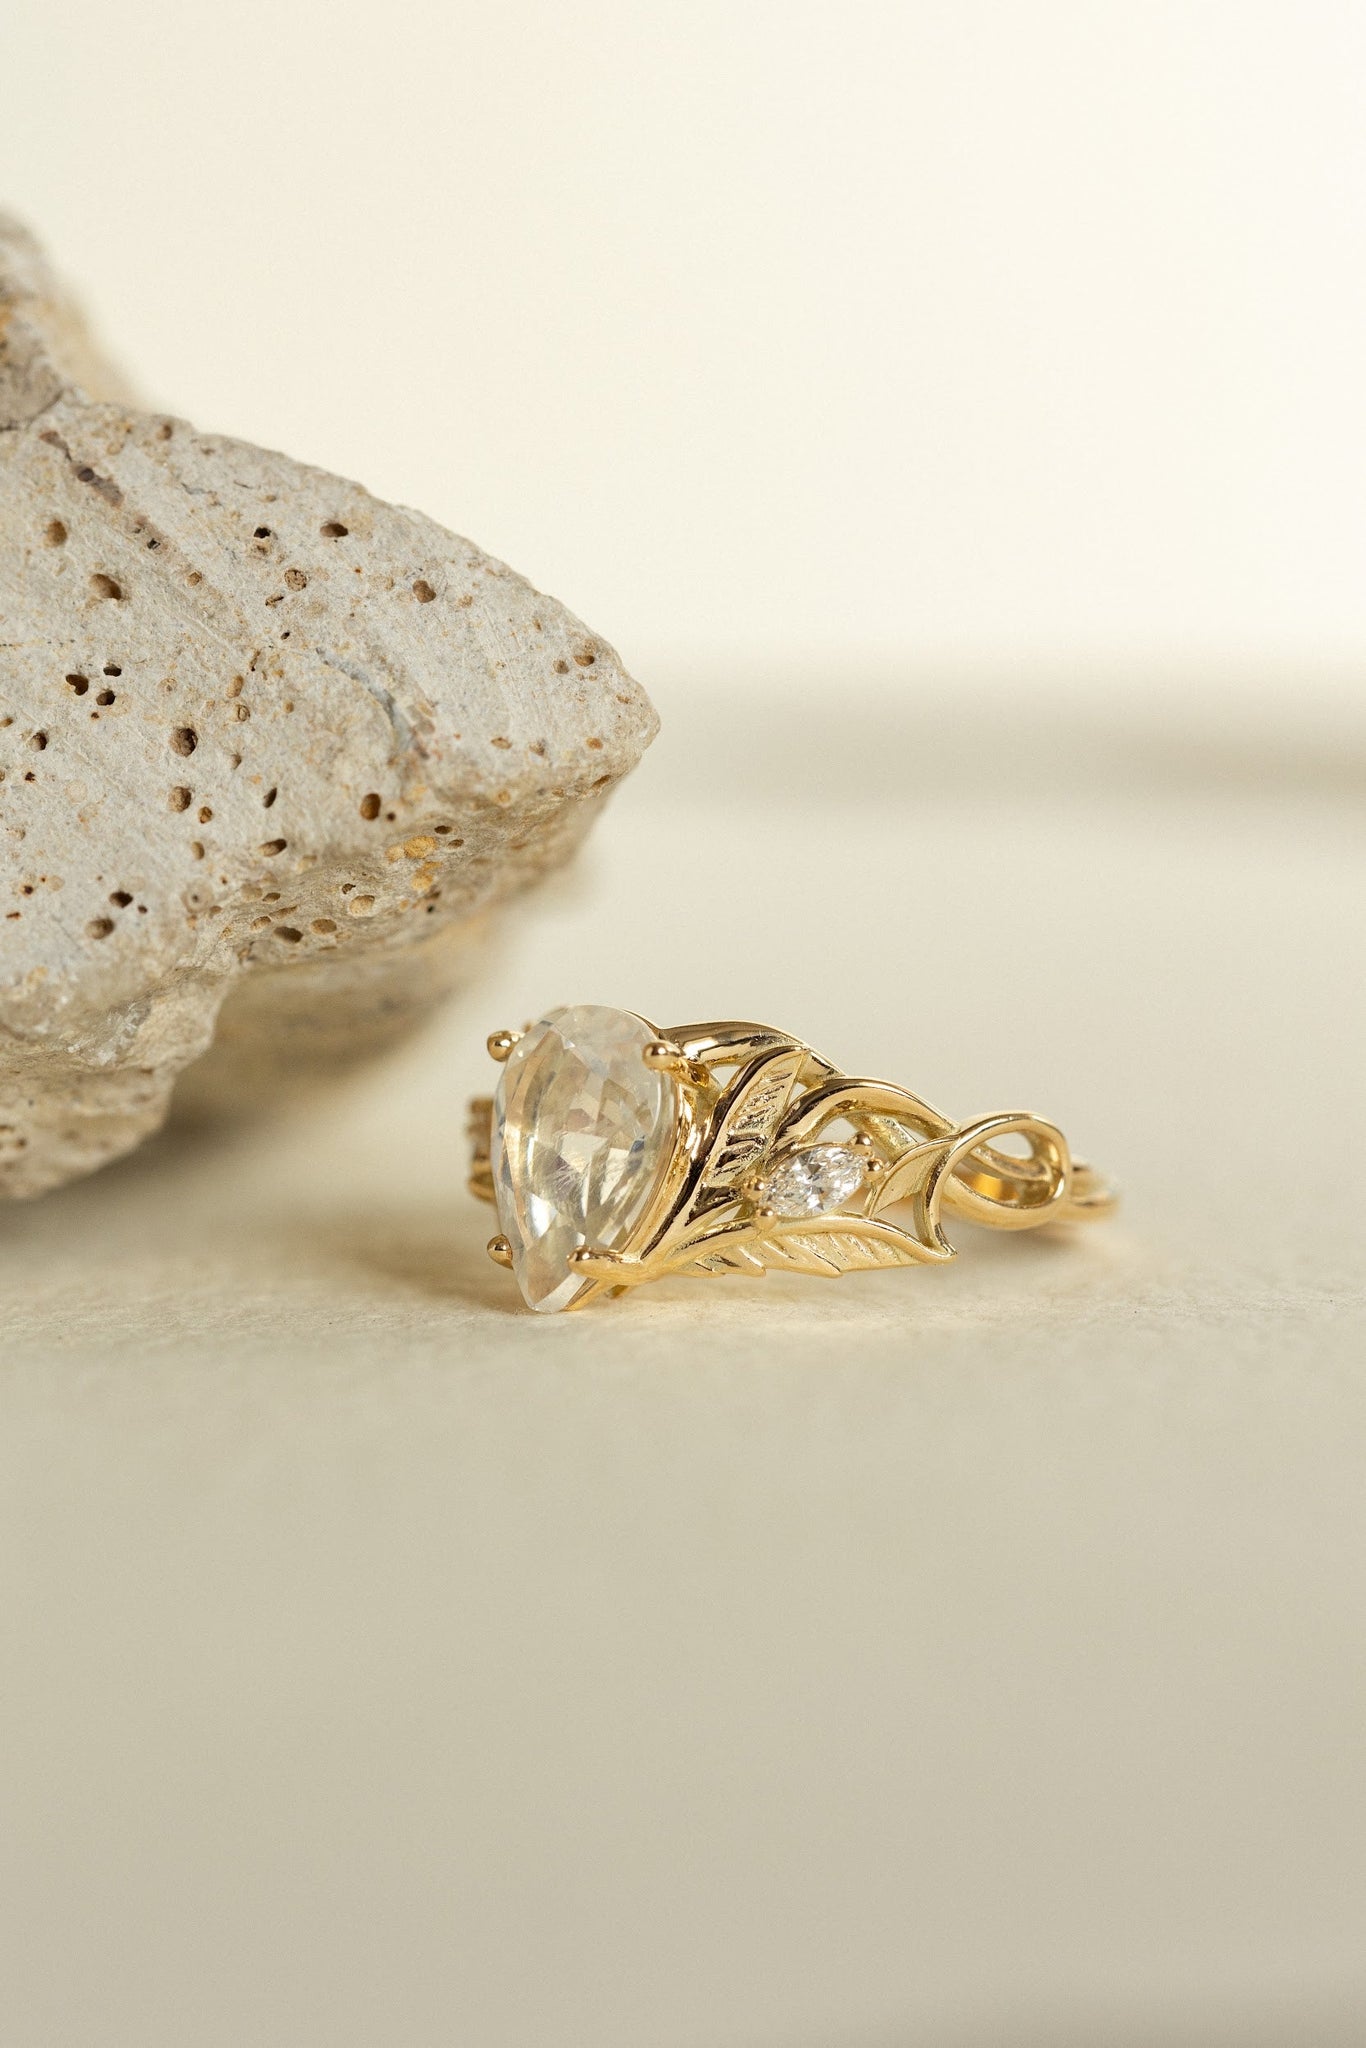 Big teardrop moonstone engagement ring, nature themed proposal ring / Ikar - Eden Garden Jewelry™